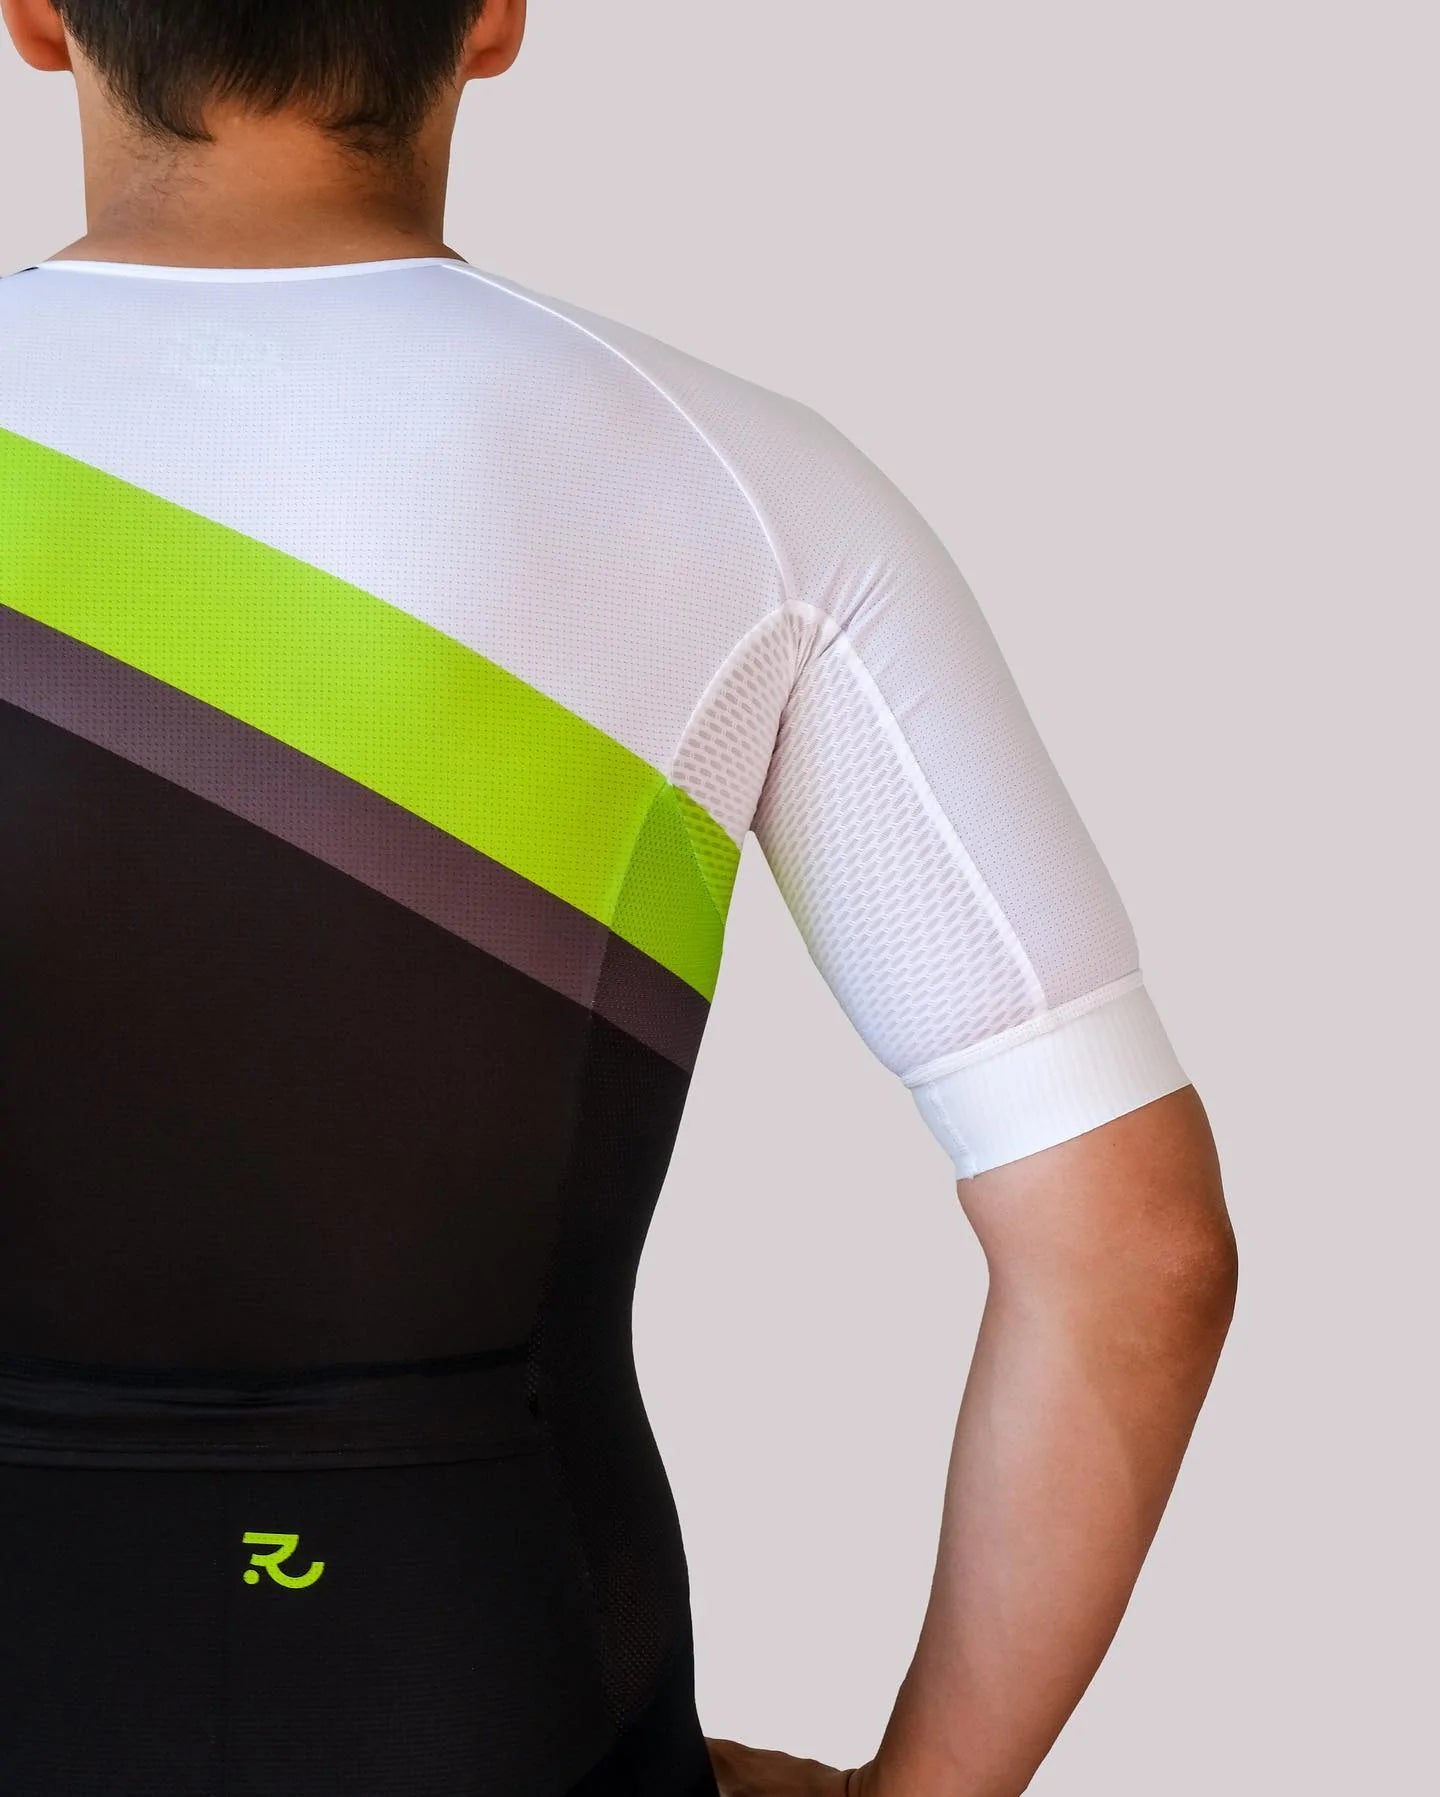 Triathlon Buddies Custom Kurzarm-Trisuit – Herren